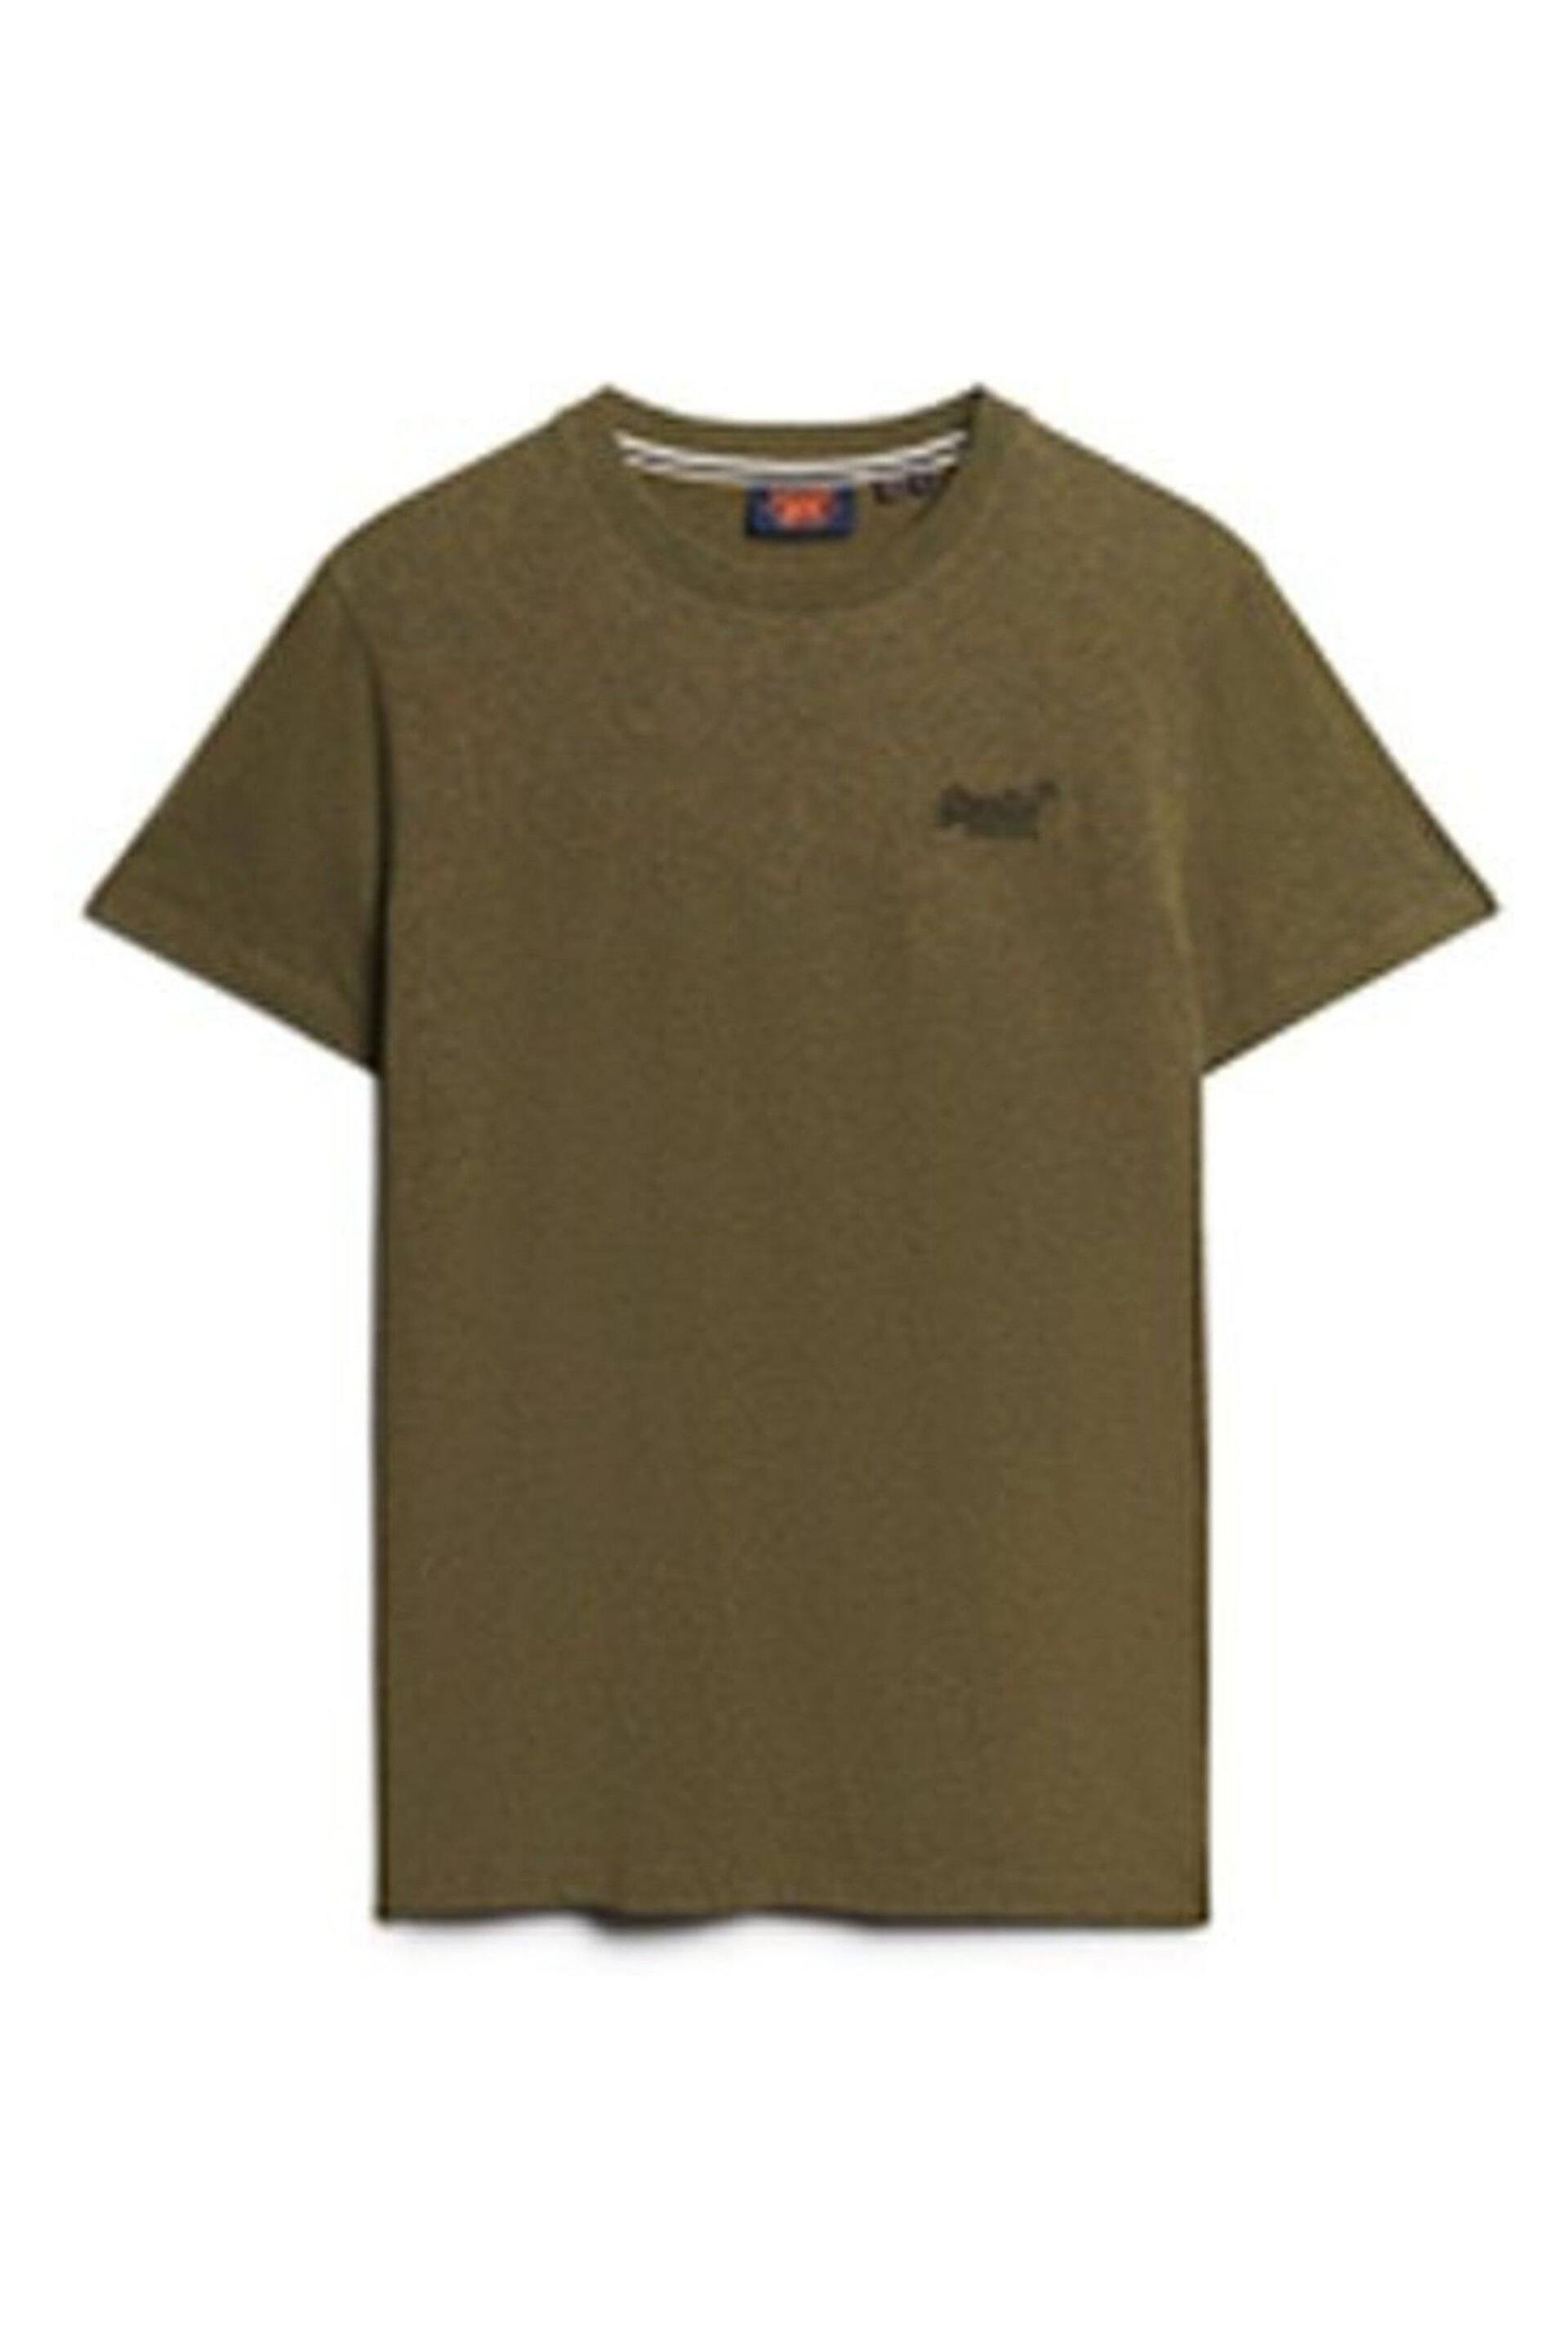 Superdry Green Vintage Logo Cap Sleeve T-Shirt - Image 4 of 6